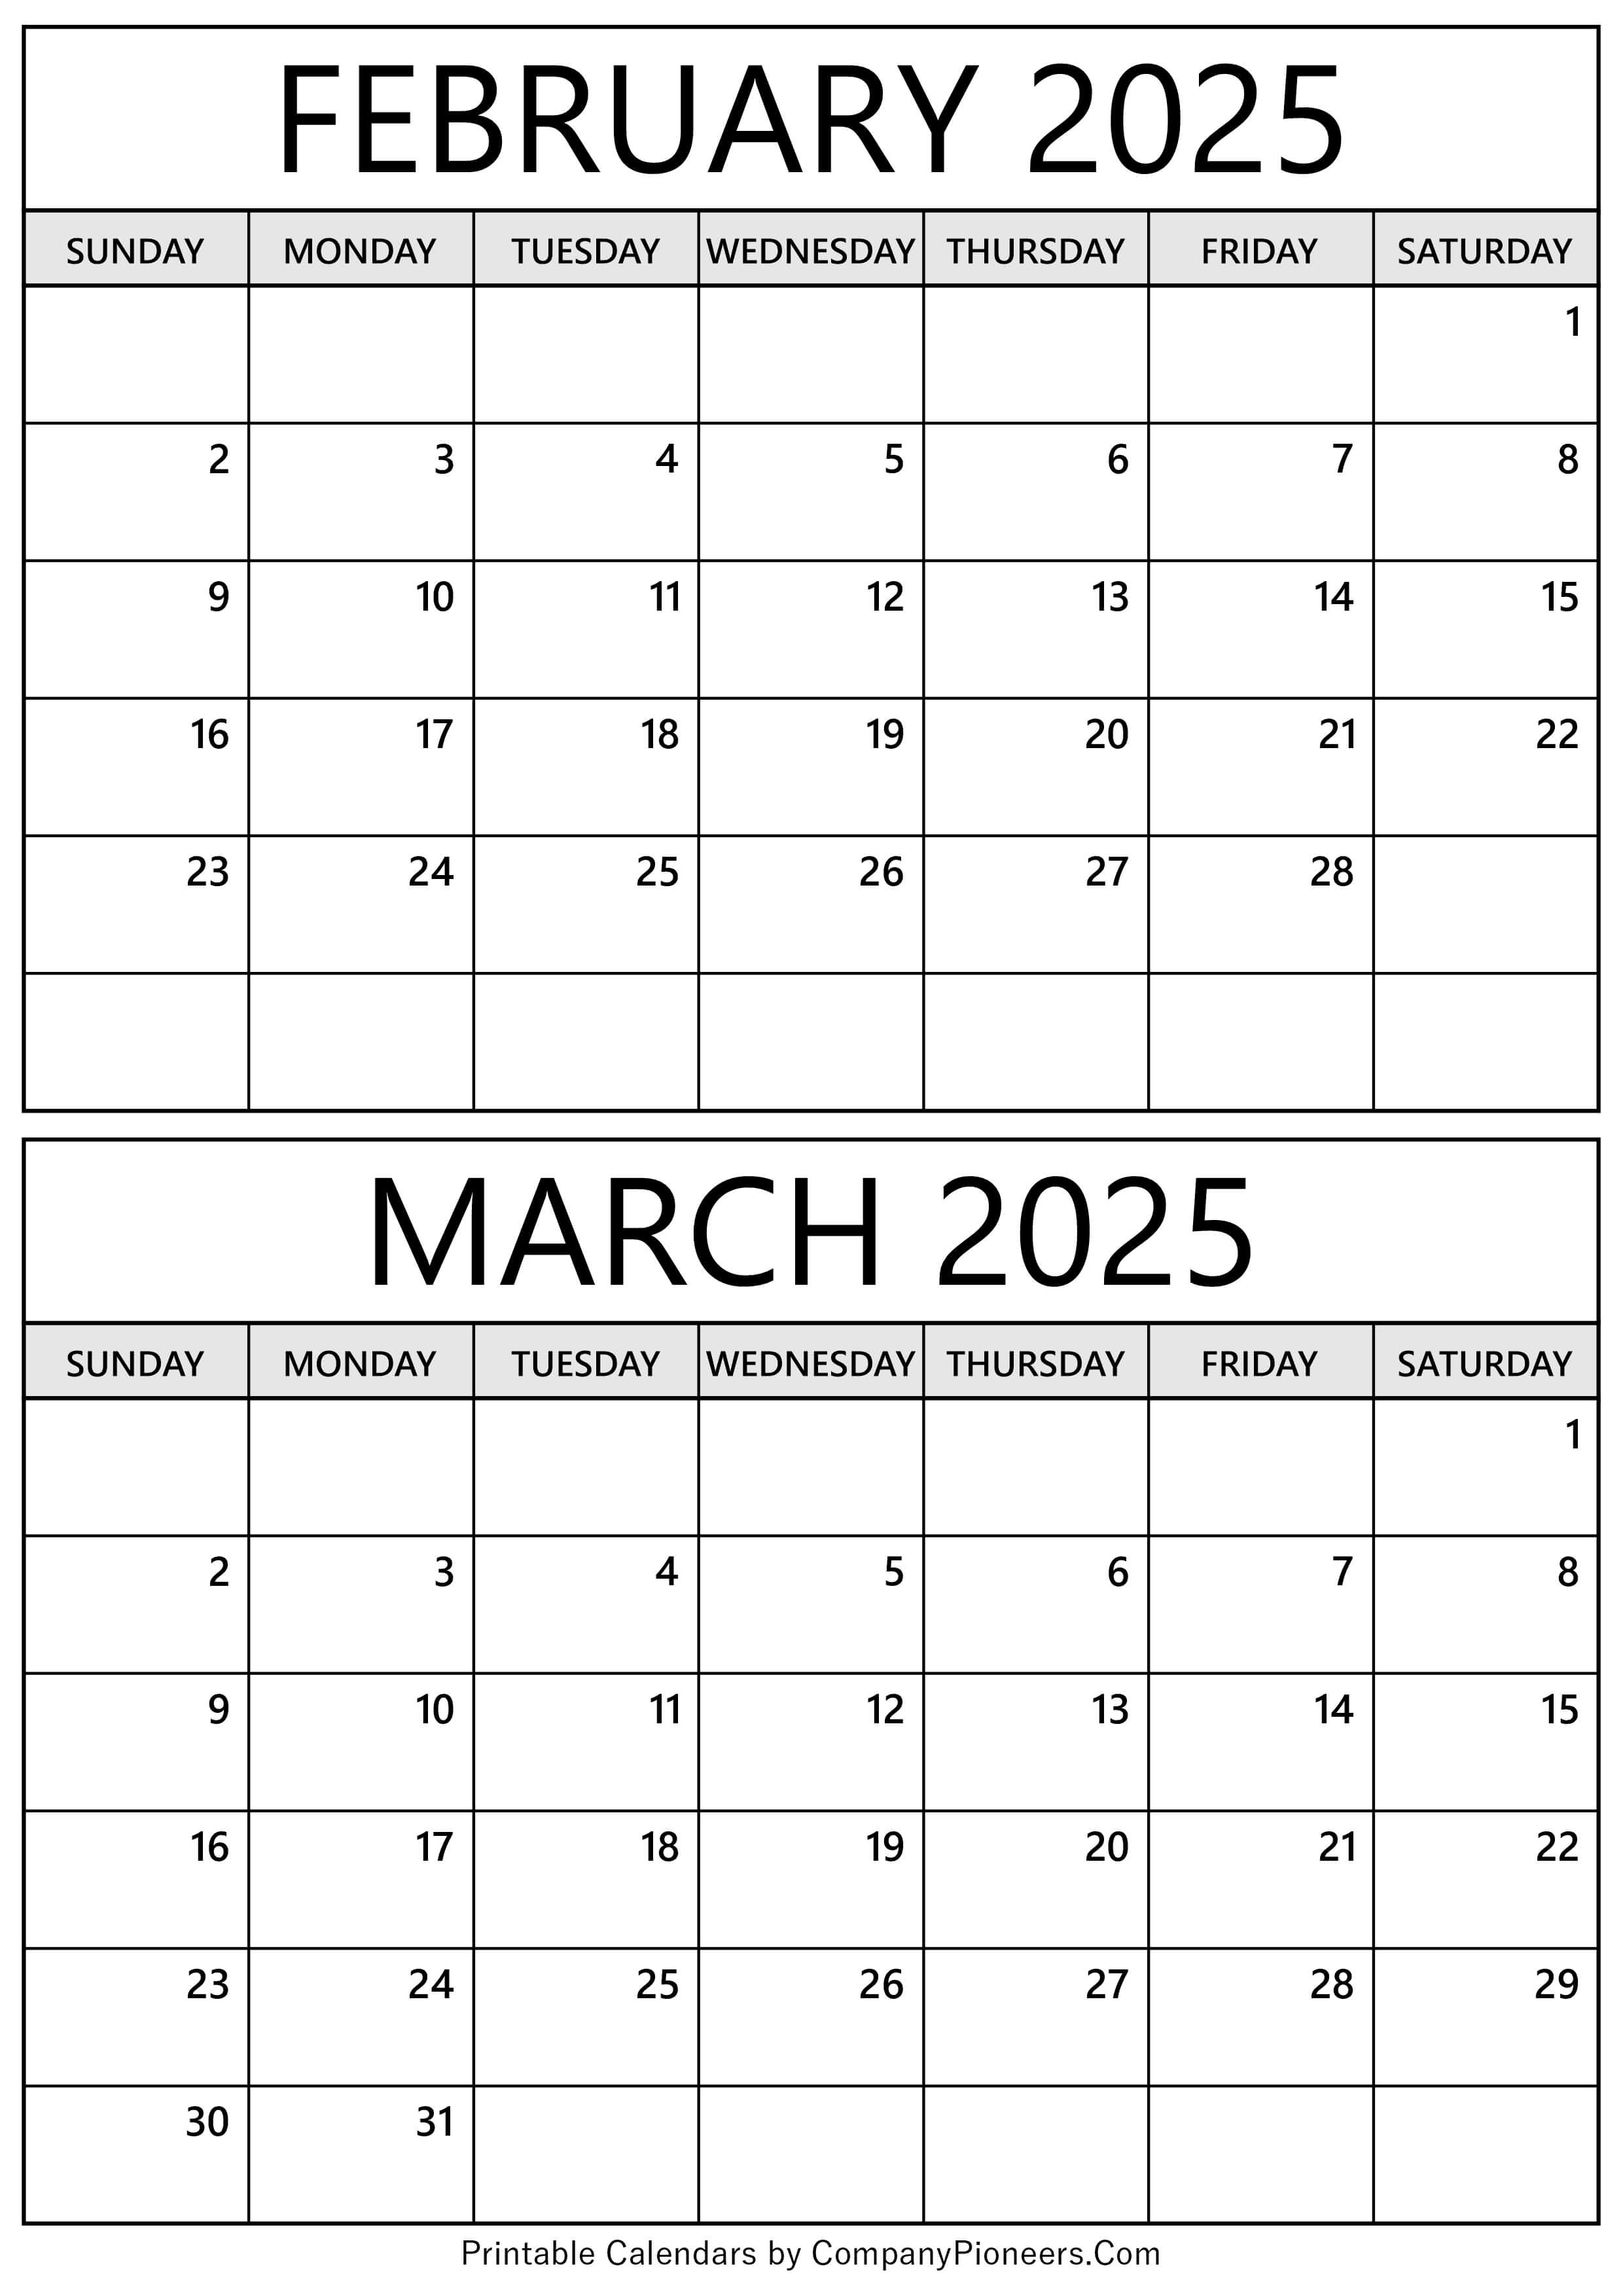 February March 2025 Calendar